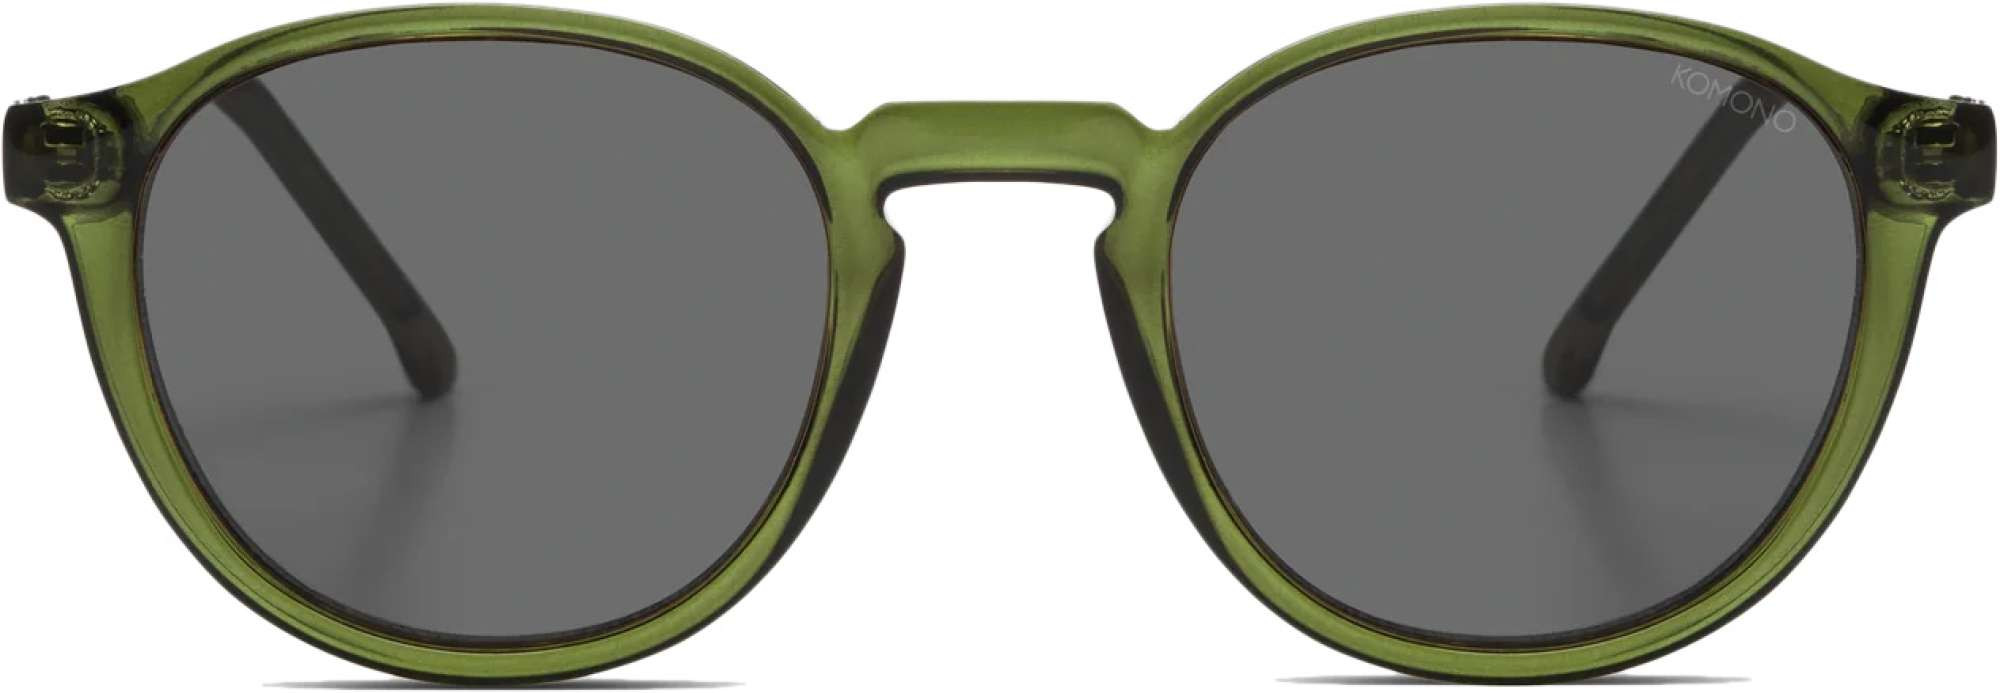 Afbeelding van Komono Liam fern sunglasses